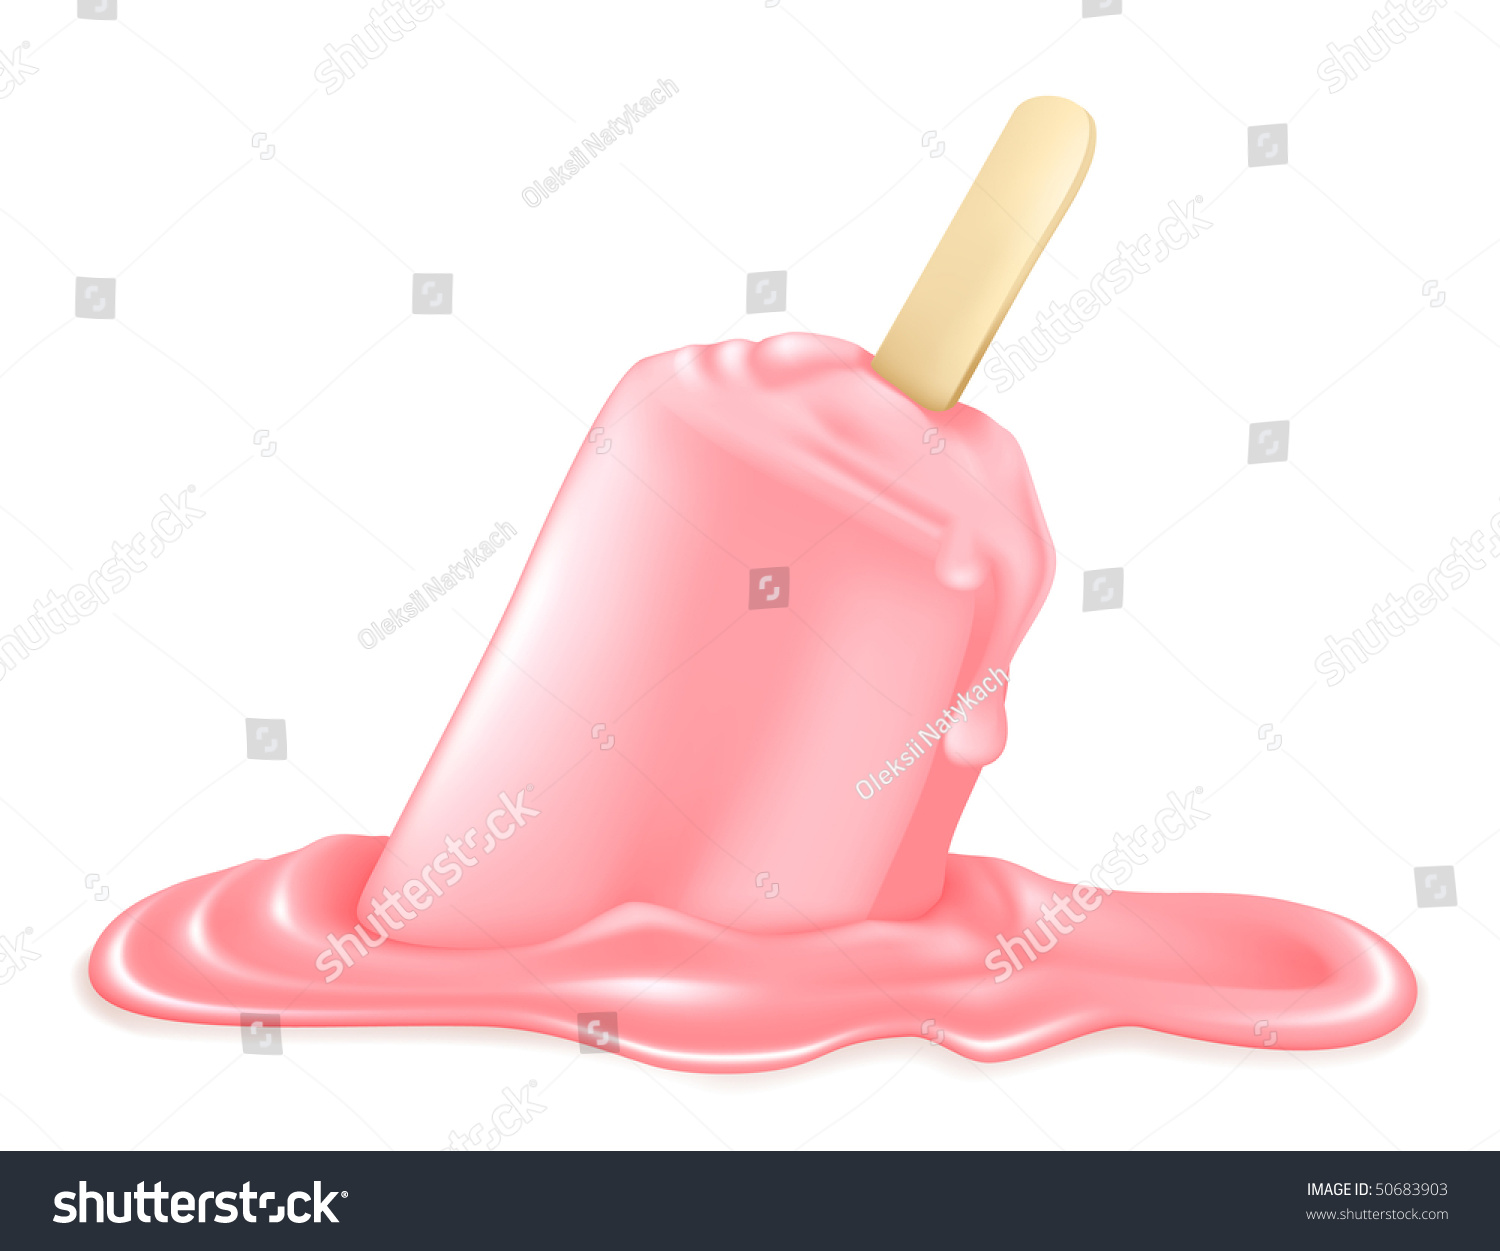 melting ice cream clipart - photo #49